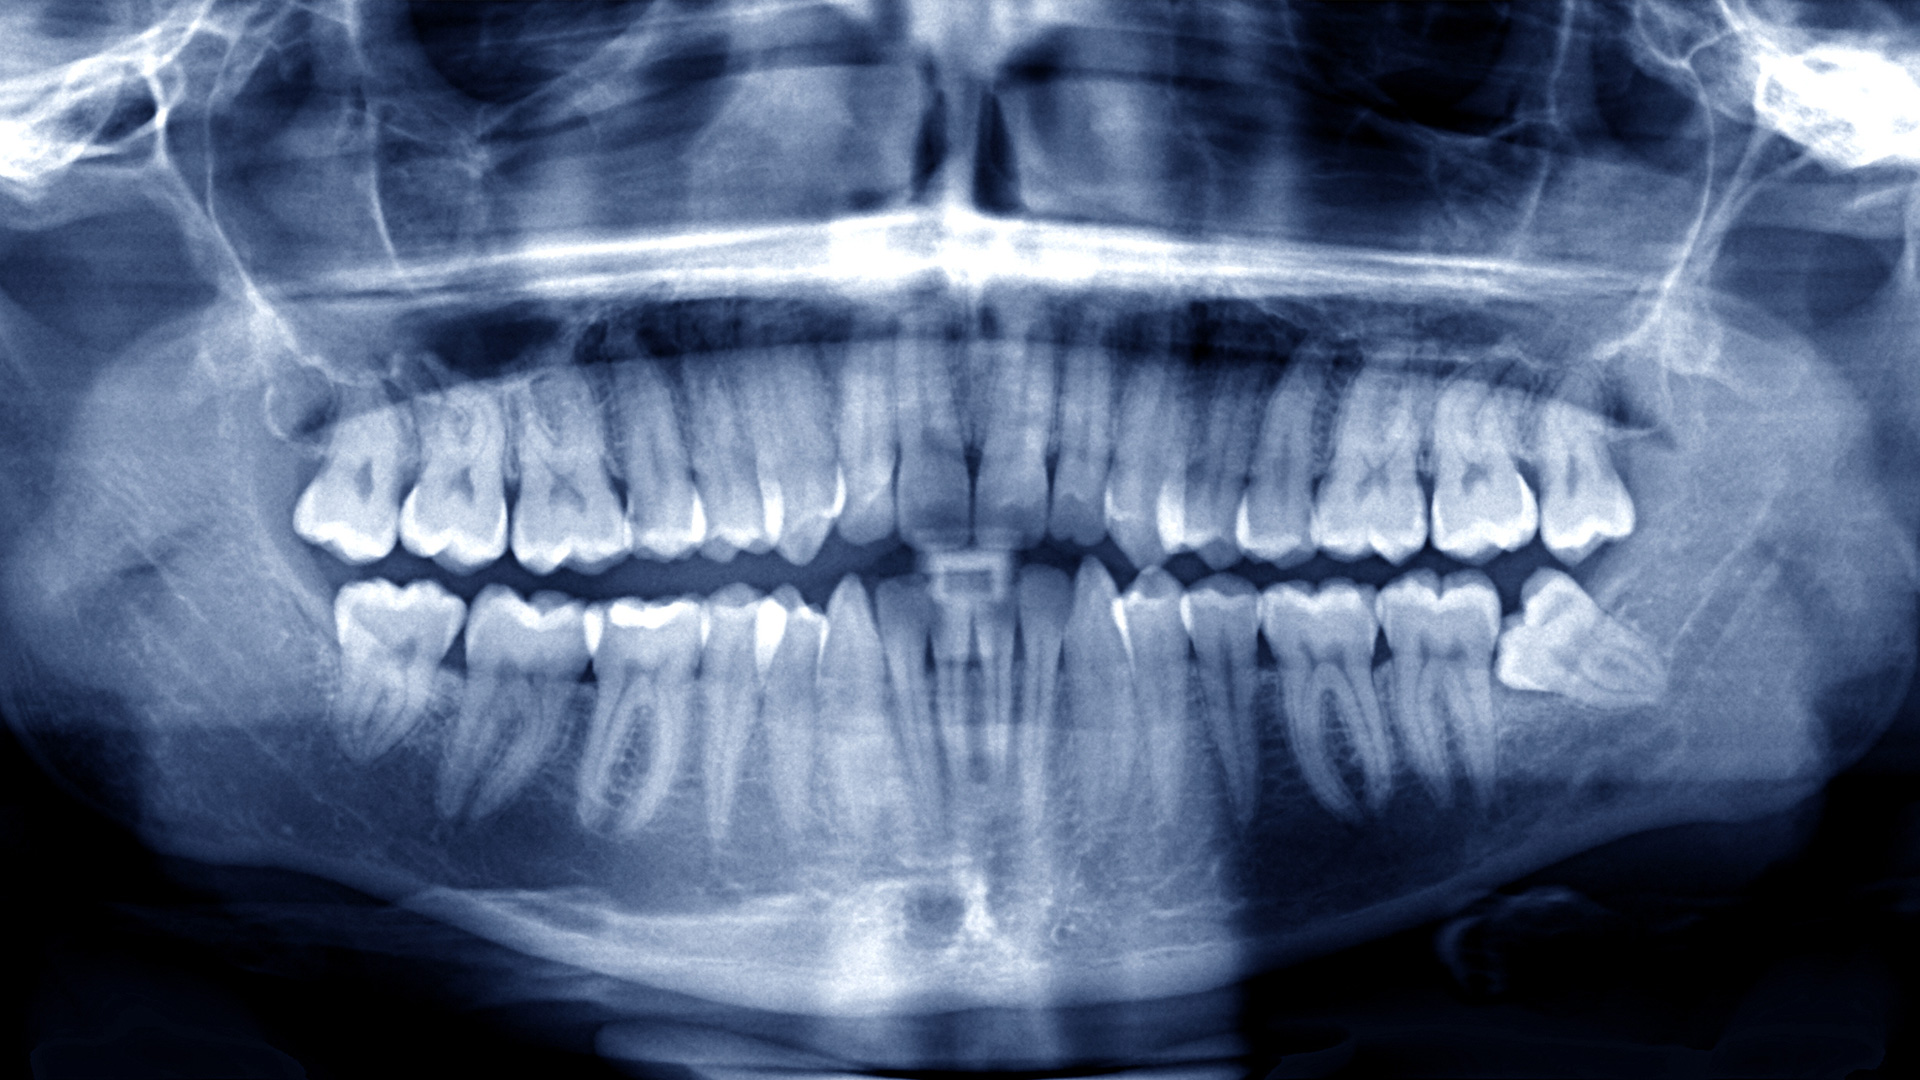 Oral Surgery and Wisdom Teeth